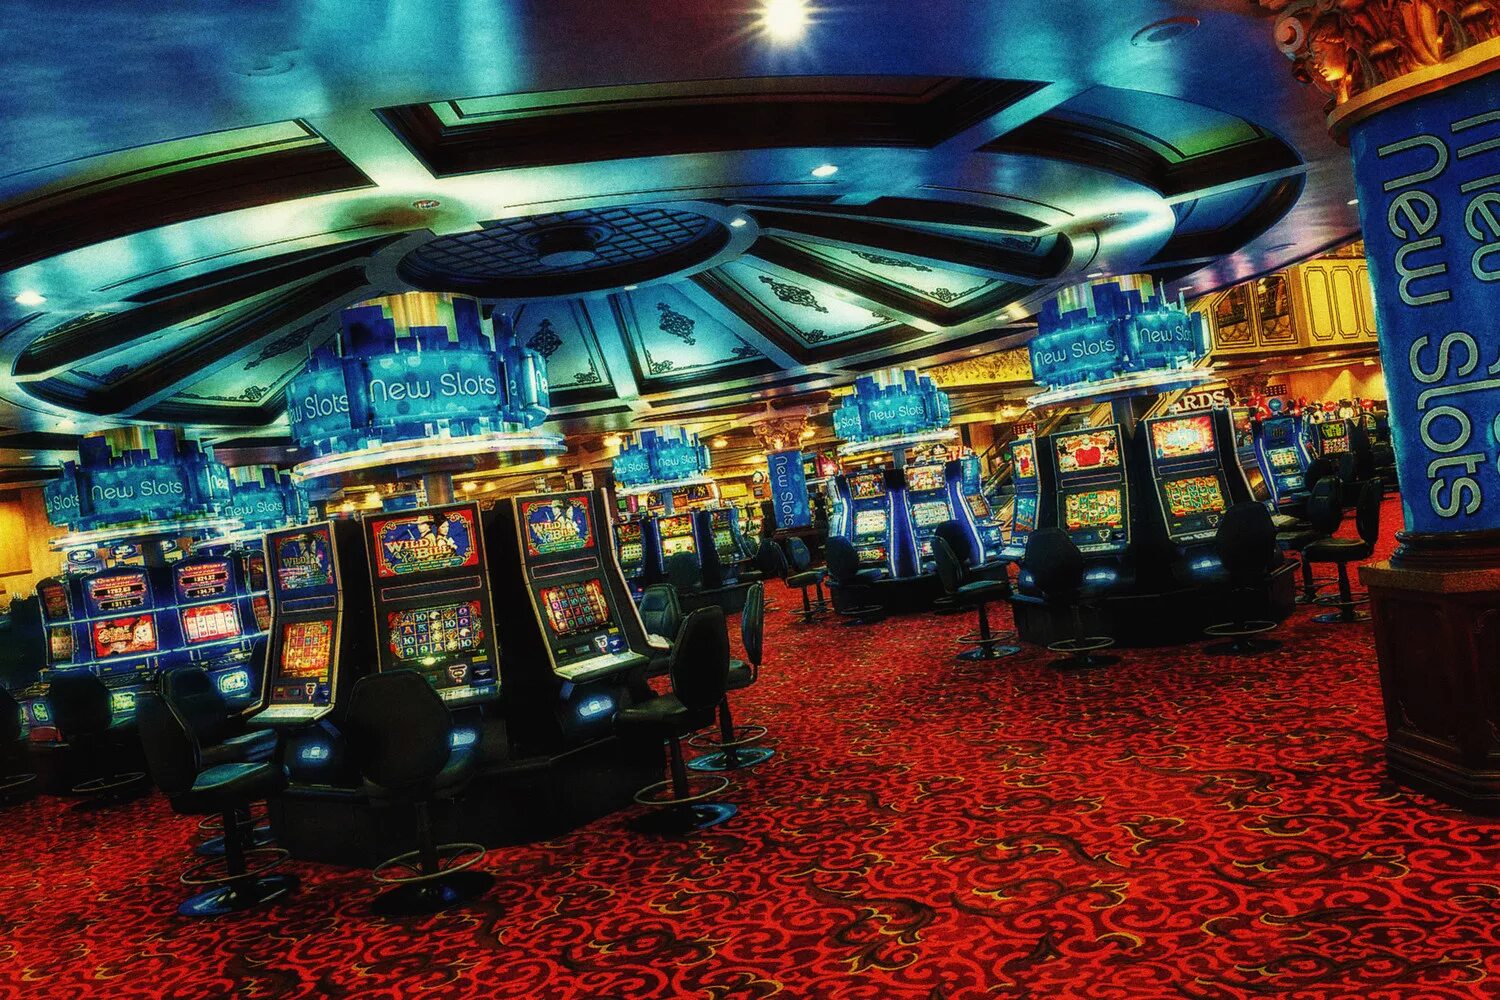 Kent casino мобильная версия casinokent ru ru